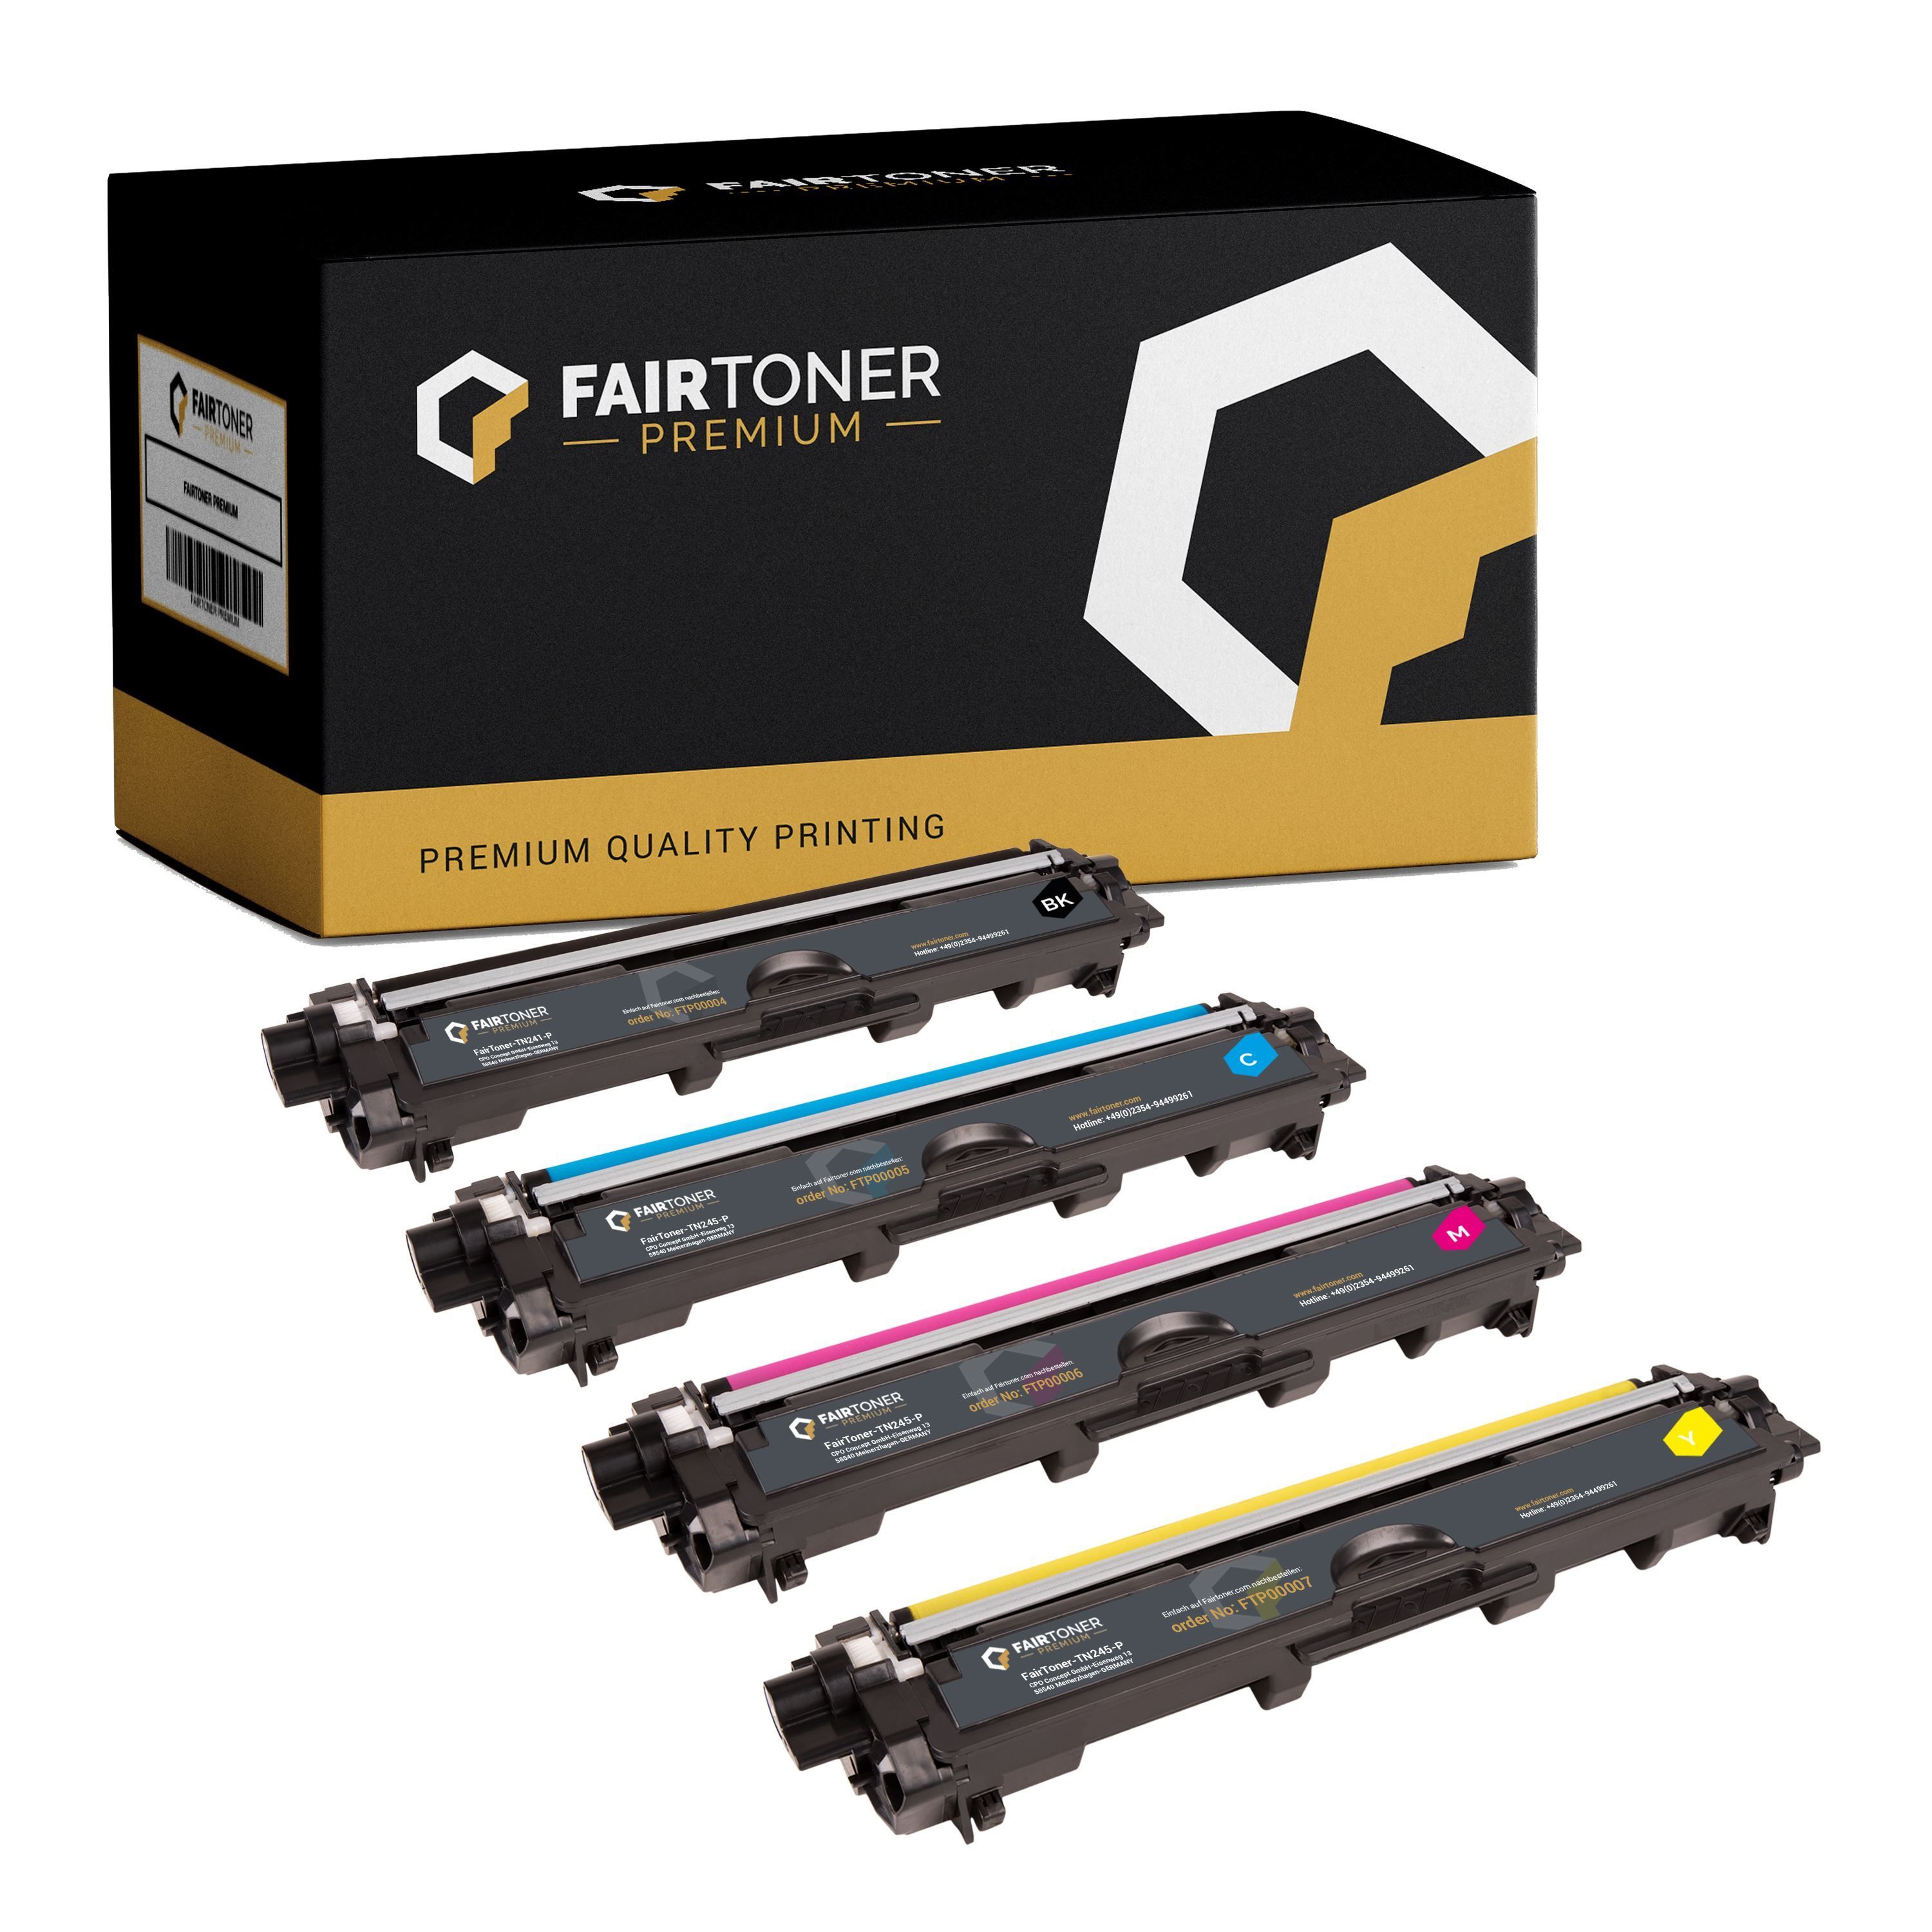 FairToner Premium 4er Multipack Set kompatibel zu Brother TN-241 TN-245 HL-3170 CDW Toner